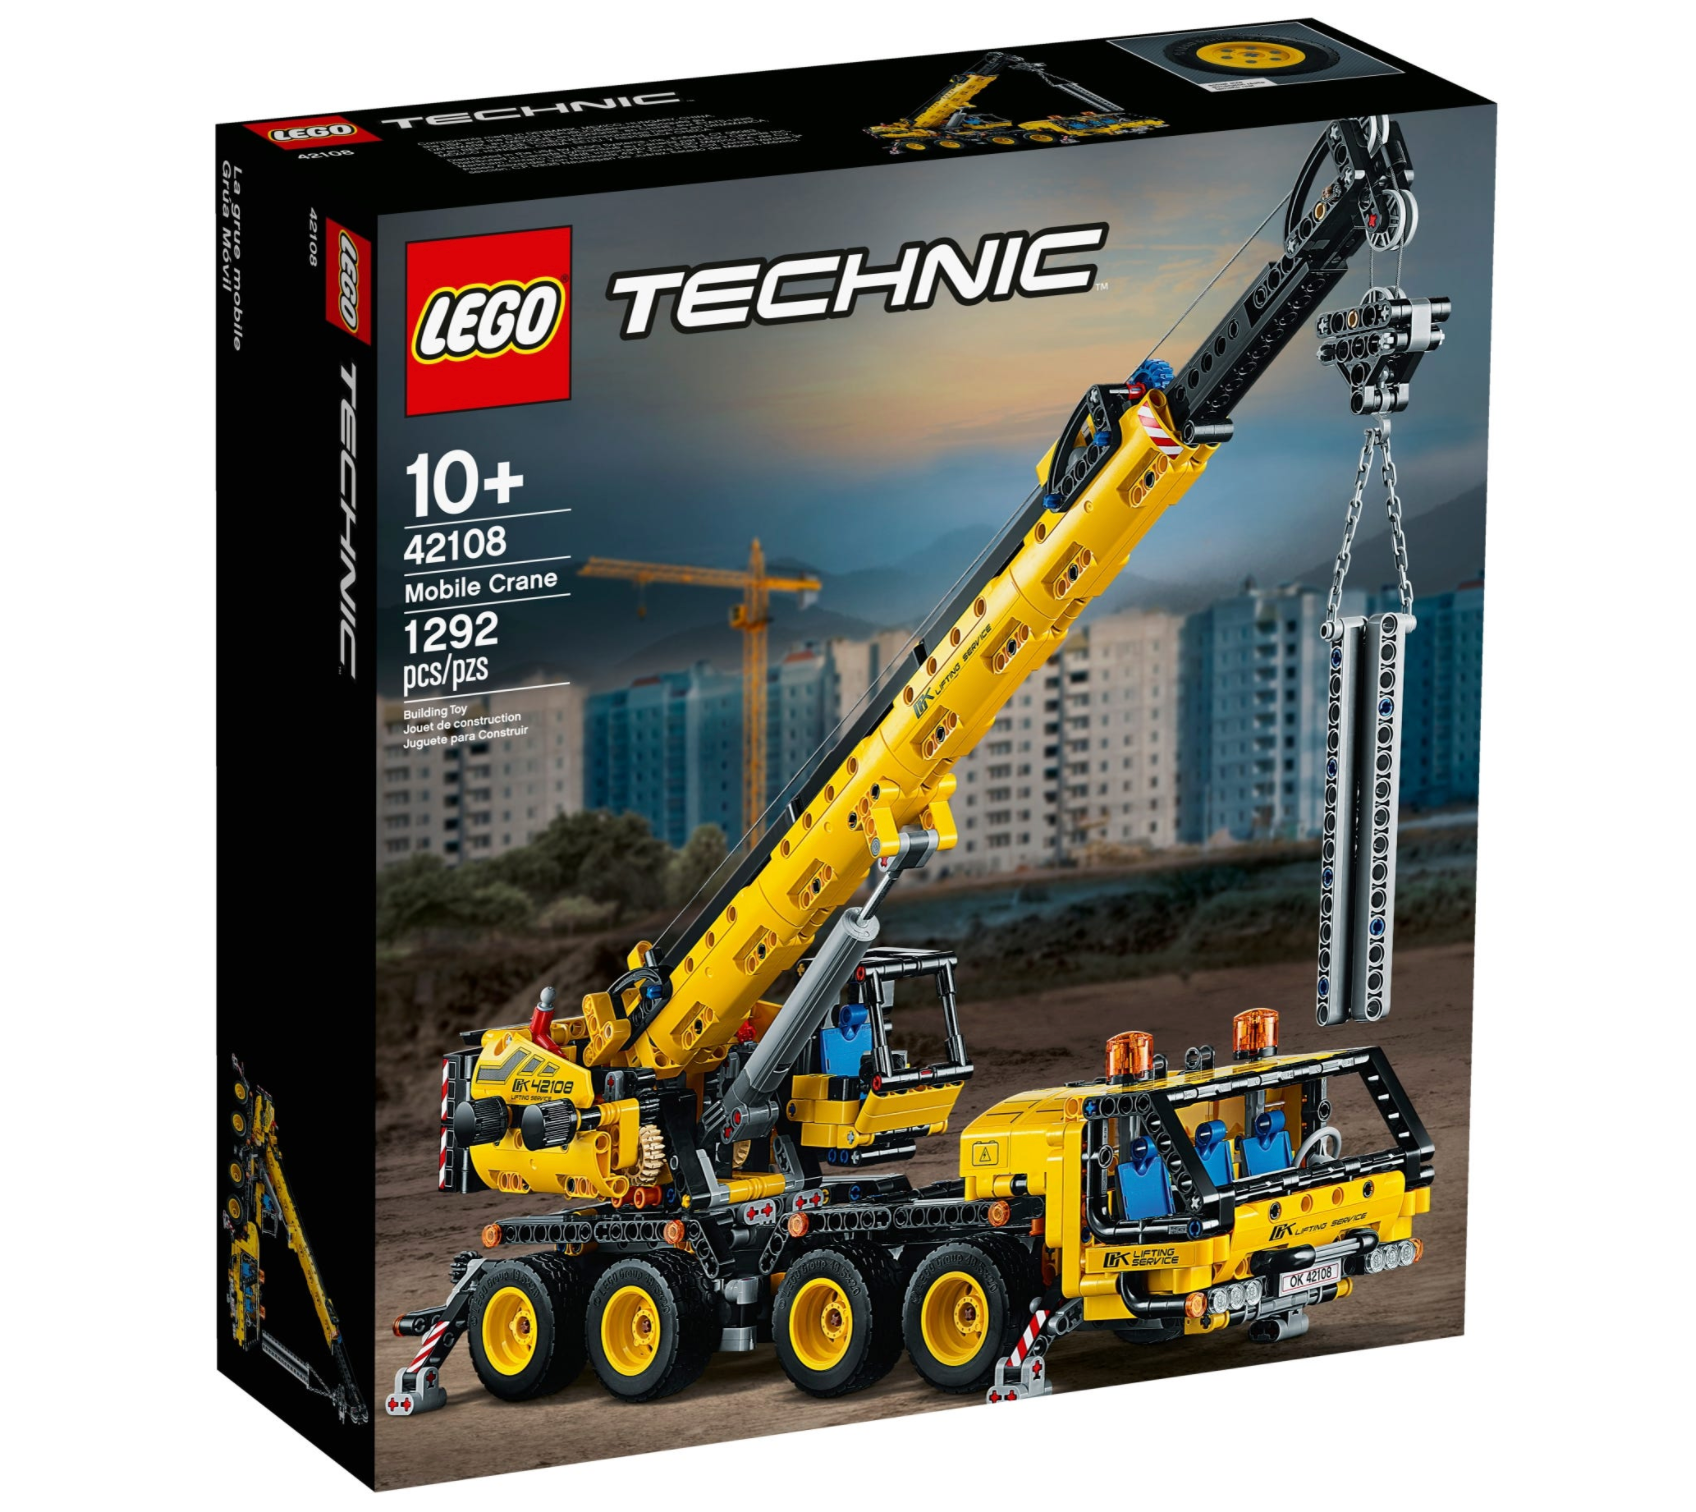 LEGO: Technic - Mobile Crane